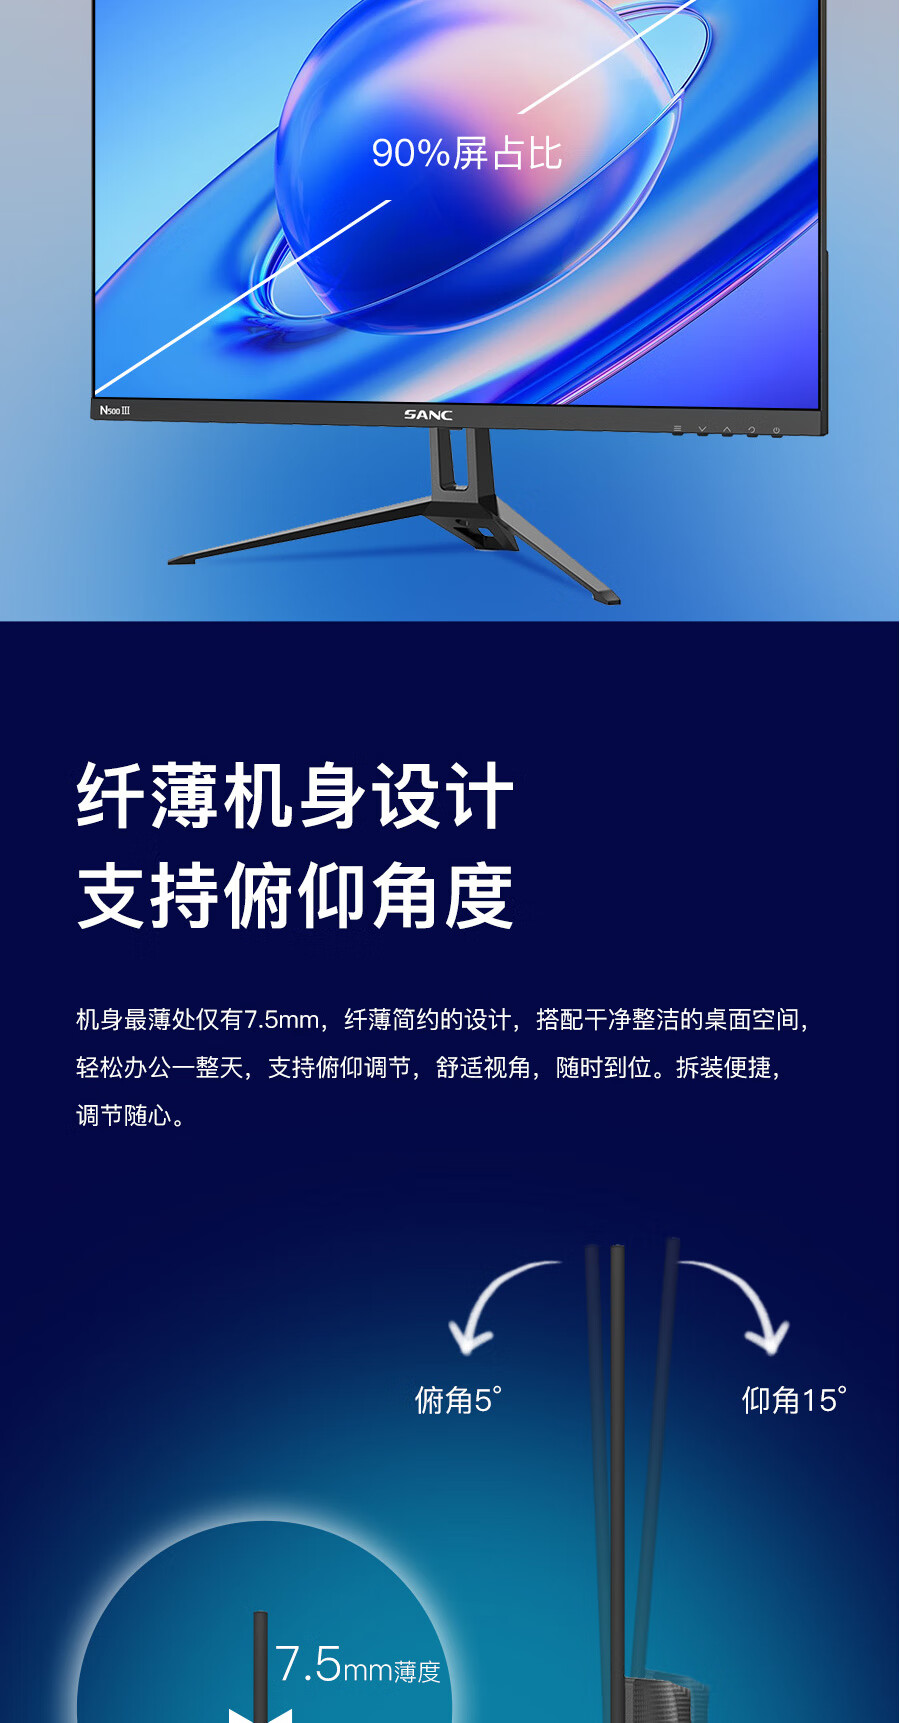 SANC 电脑显示器24英寸IPS全高清75Hz 低蓝光 广视角 可壁挂LED液晶屏幕N500 2代 24英寸全高清